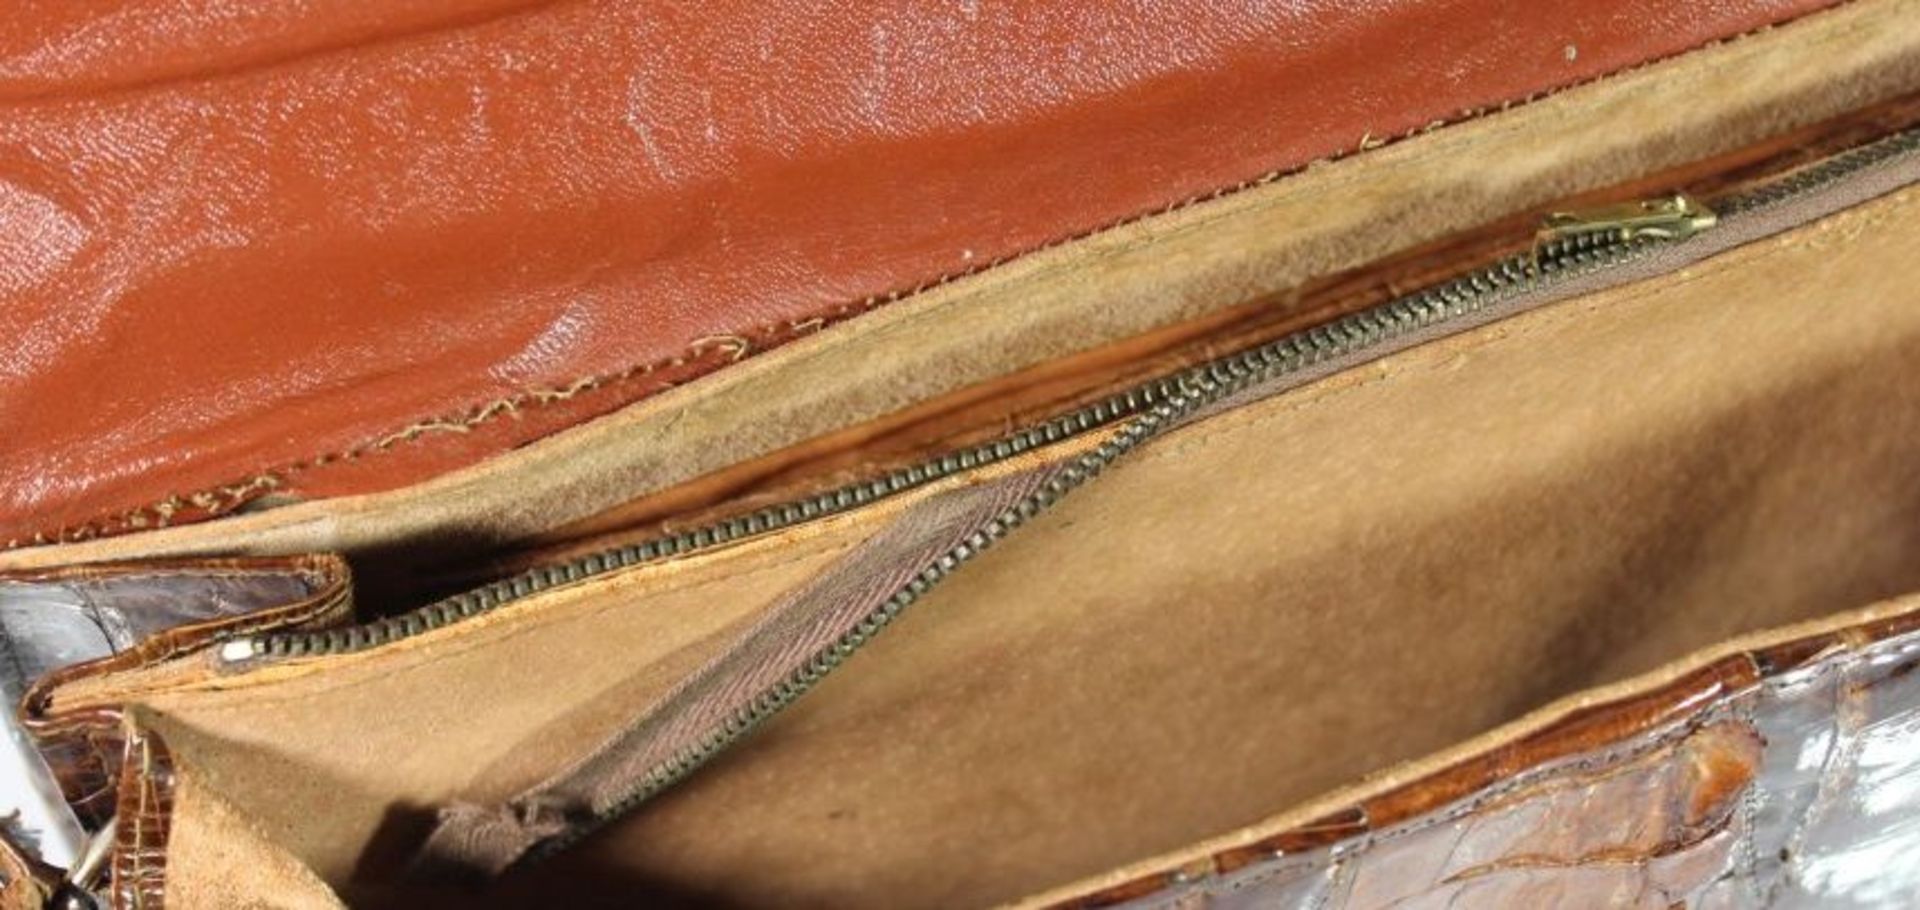 Damen-Handtasche, braunes Krokoleder, älter, getragene Erhaltung, 19 x 29cm.- - -22.61 % buyer's - Image 5 of 5